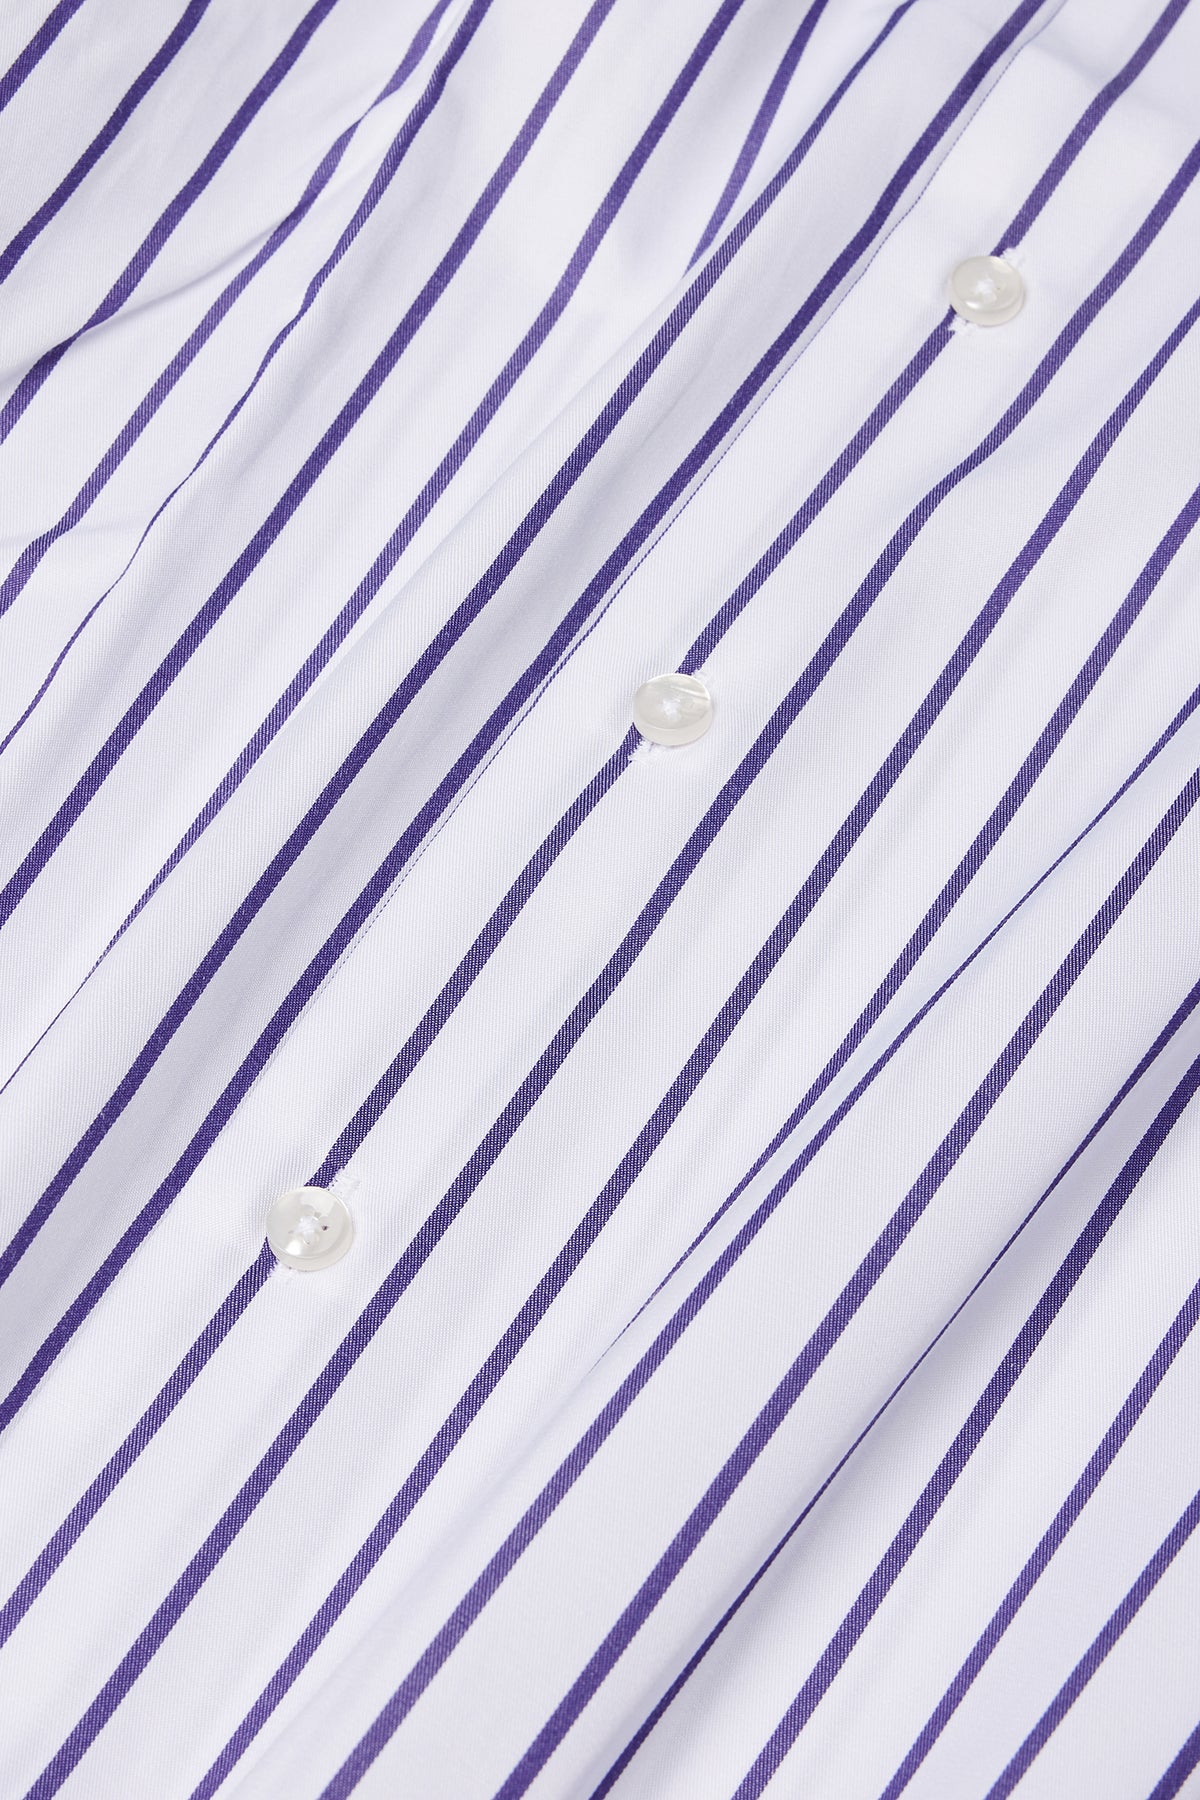 White-Purple Striped Italian Spread Collar Shirt